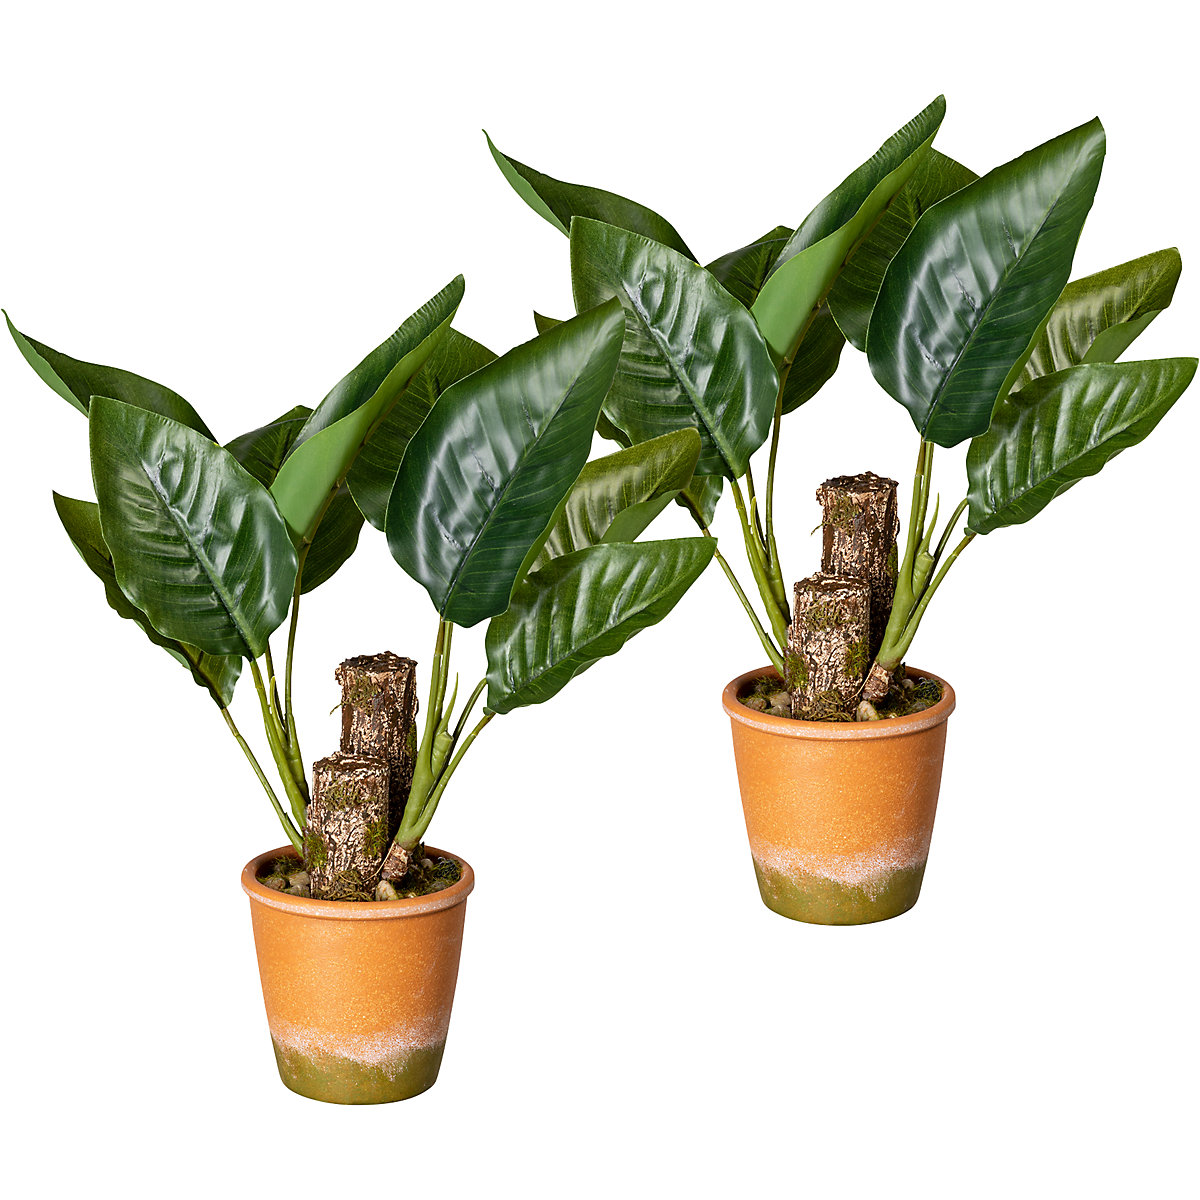 Canna leafy plant